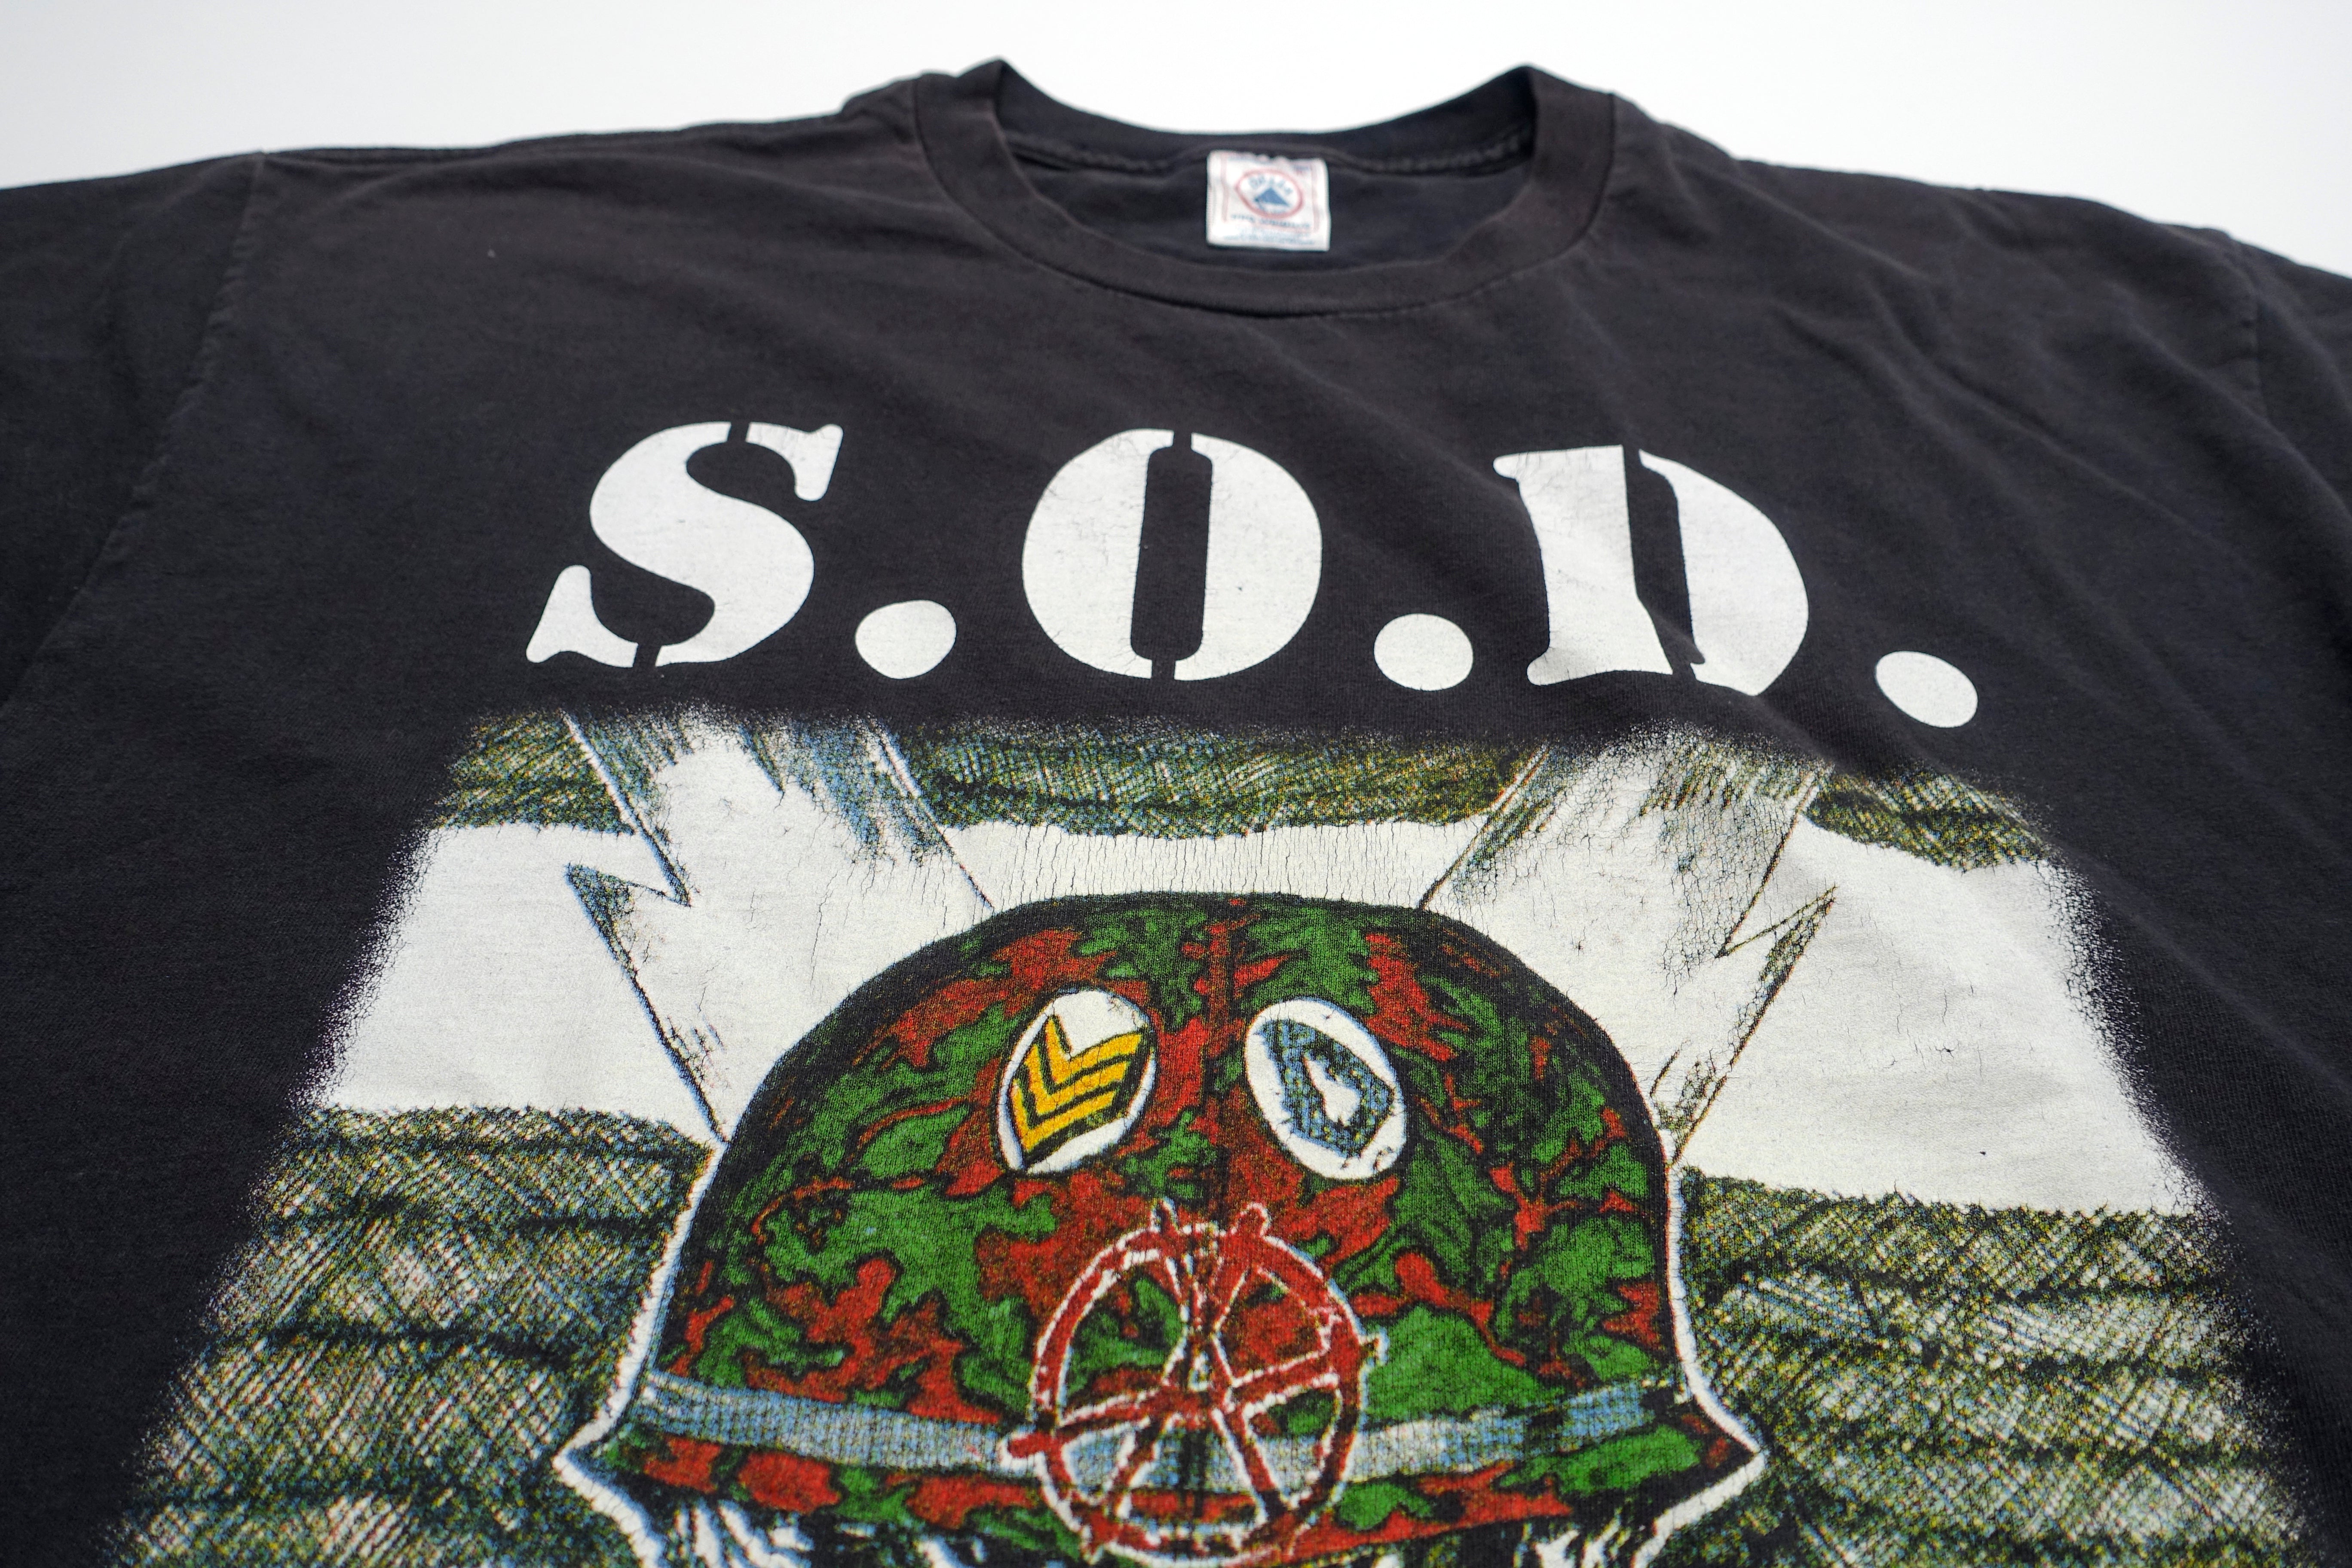 S.O.D. - Speak English Or Die 90's Tour Shirt Size XL